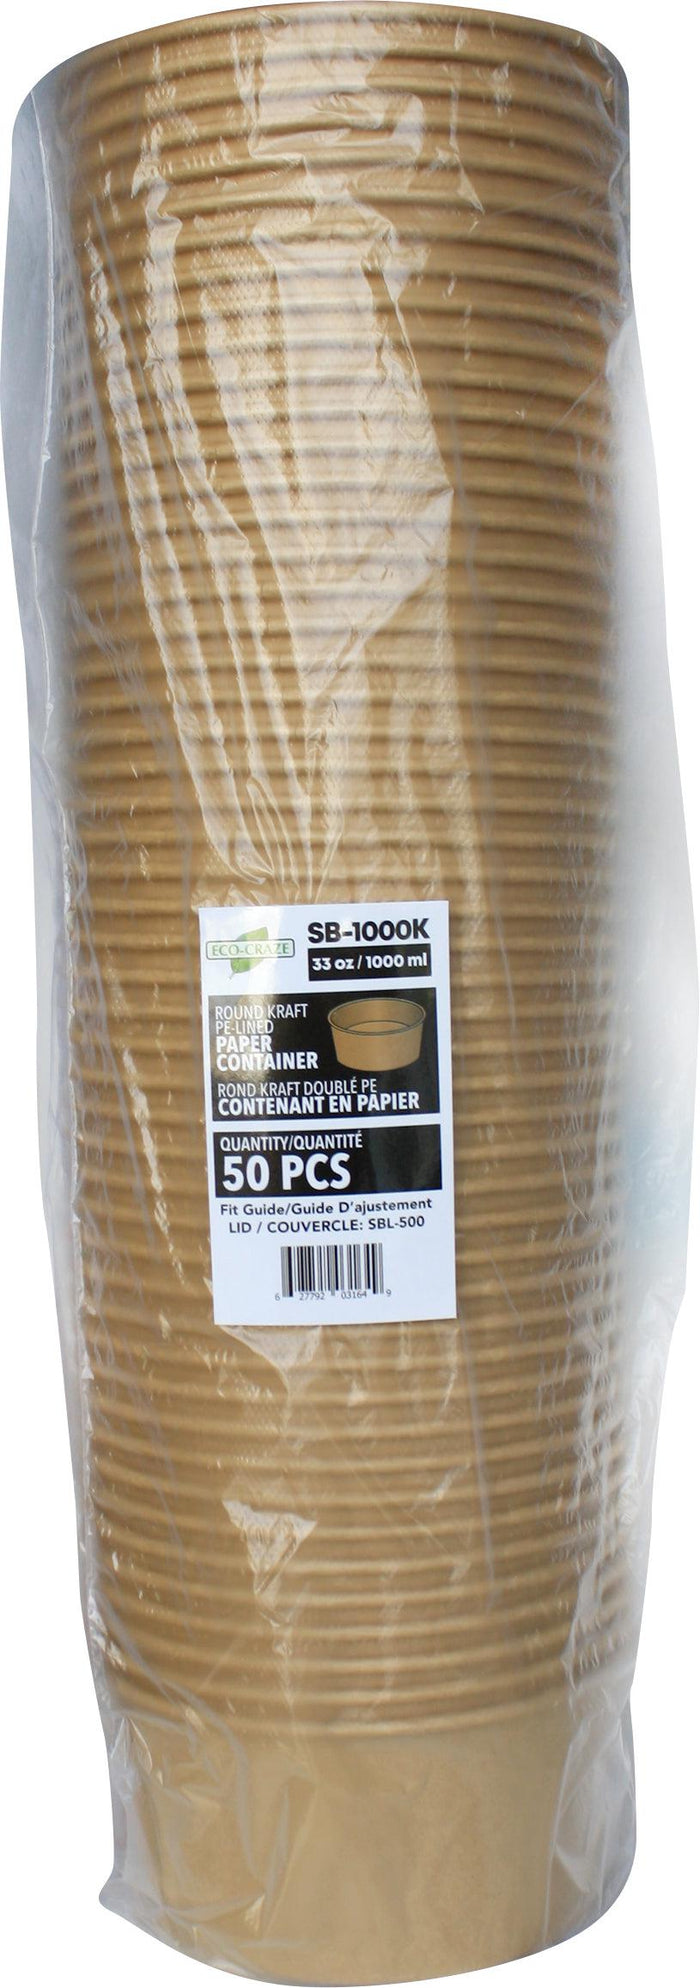 Eco-Craze - Kraft PE-Lined Paper Container - Round - 1000ml - SB-1000K